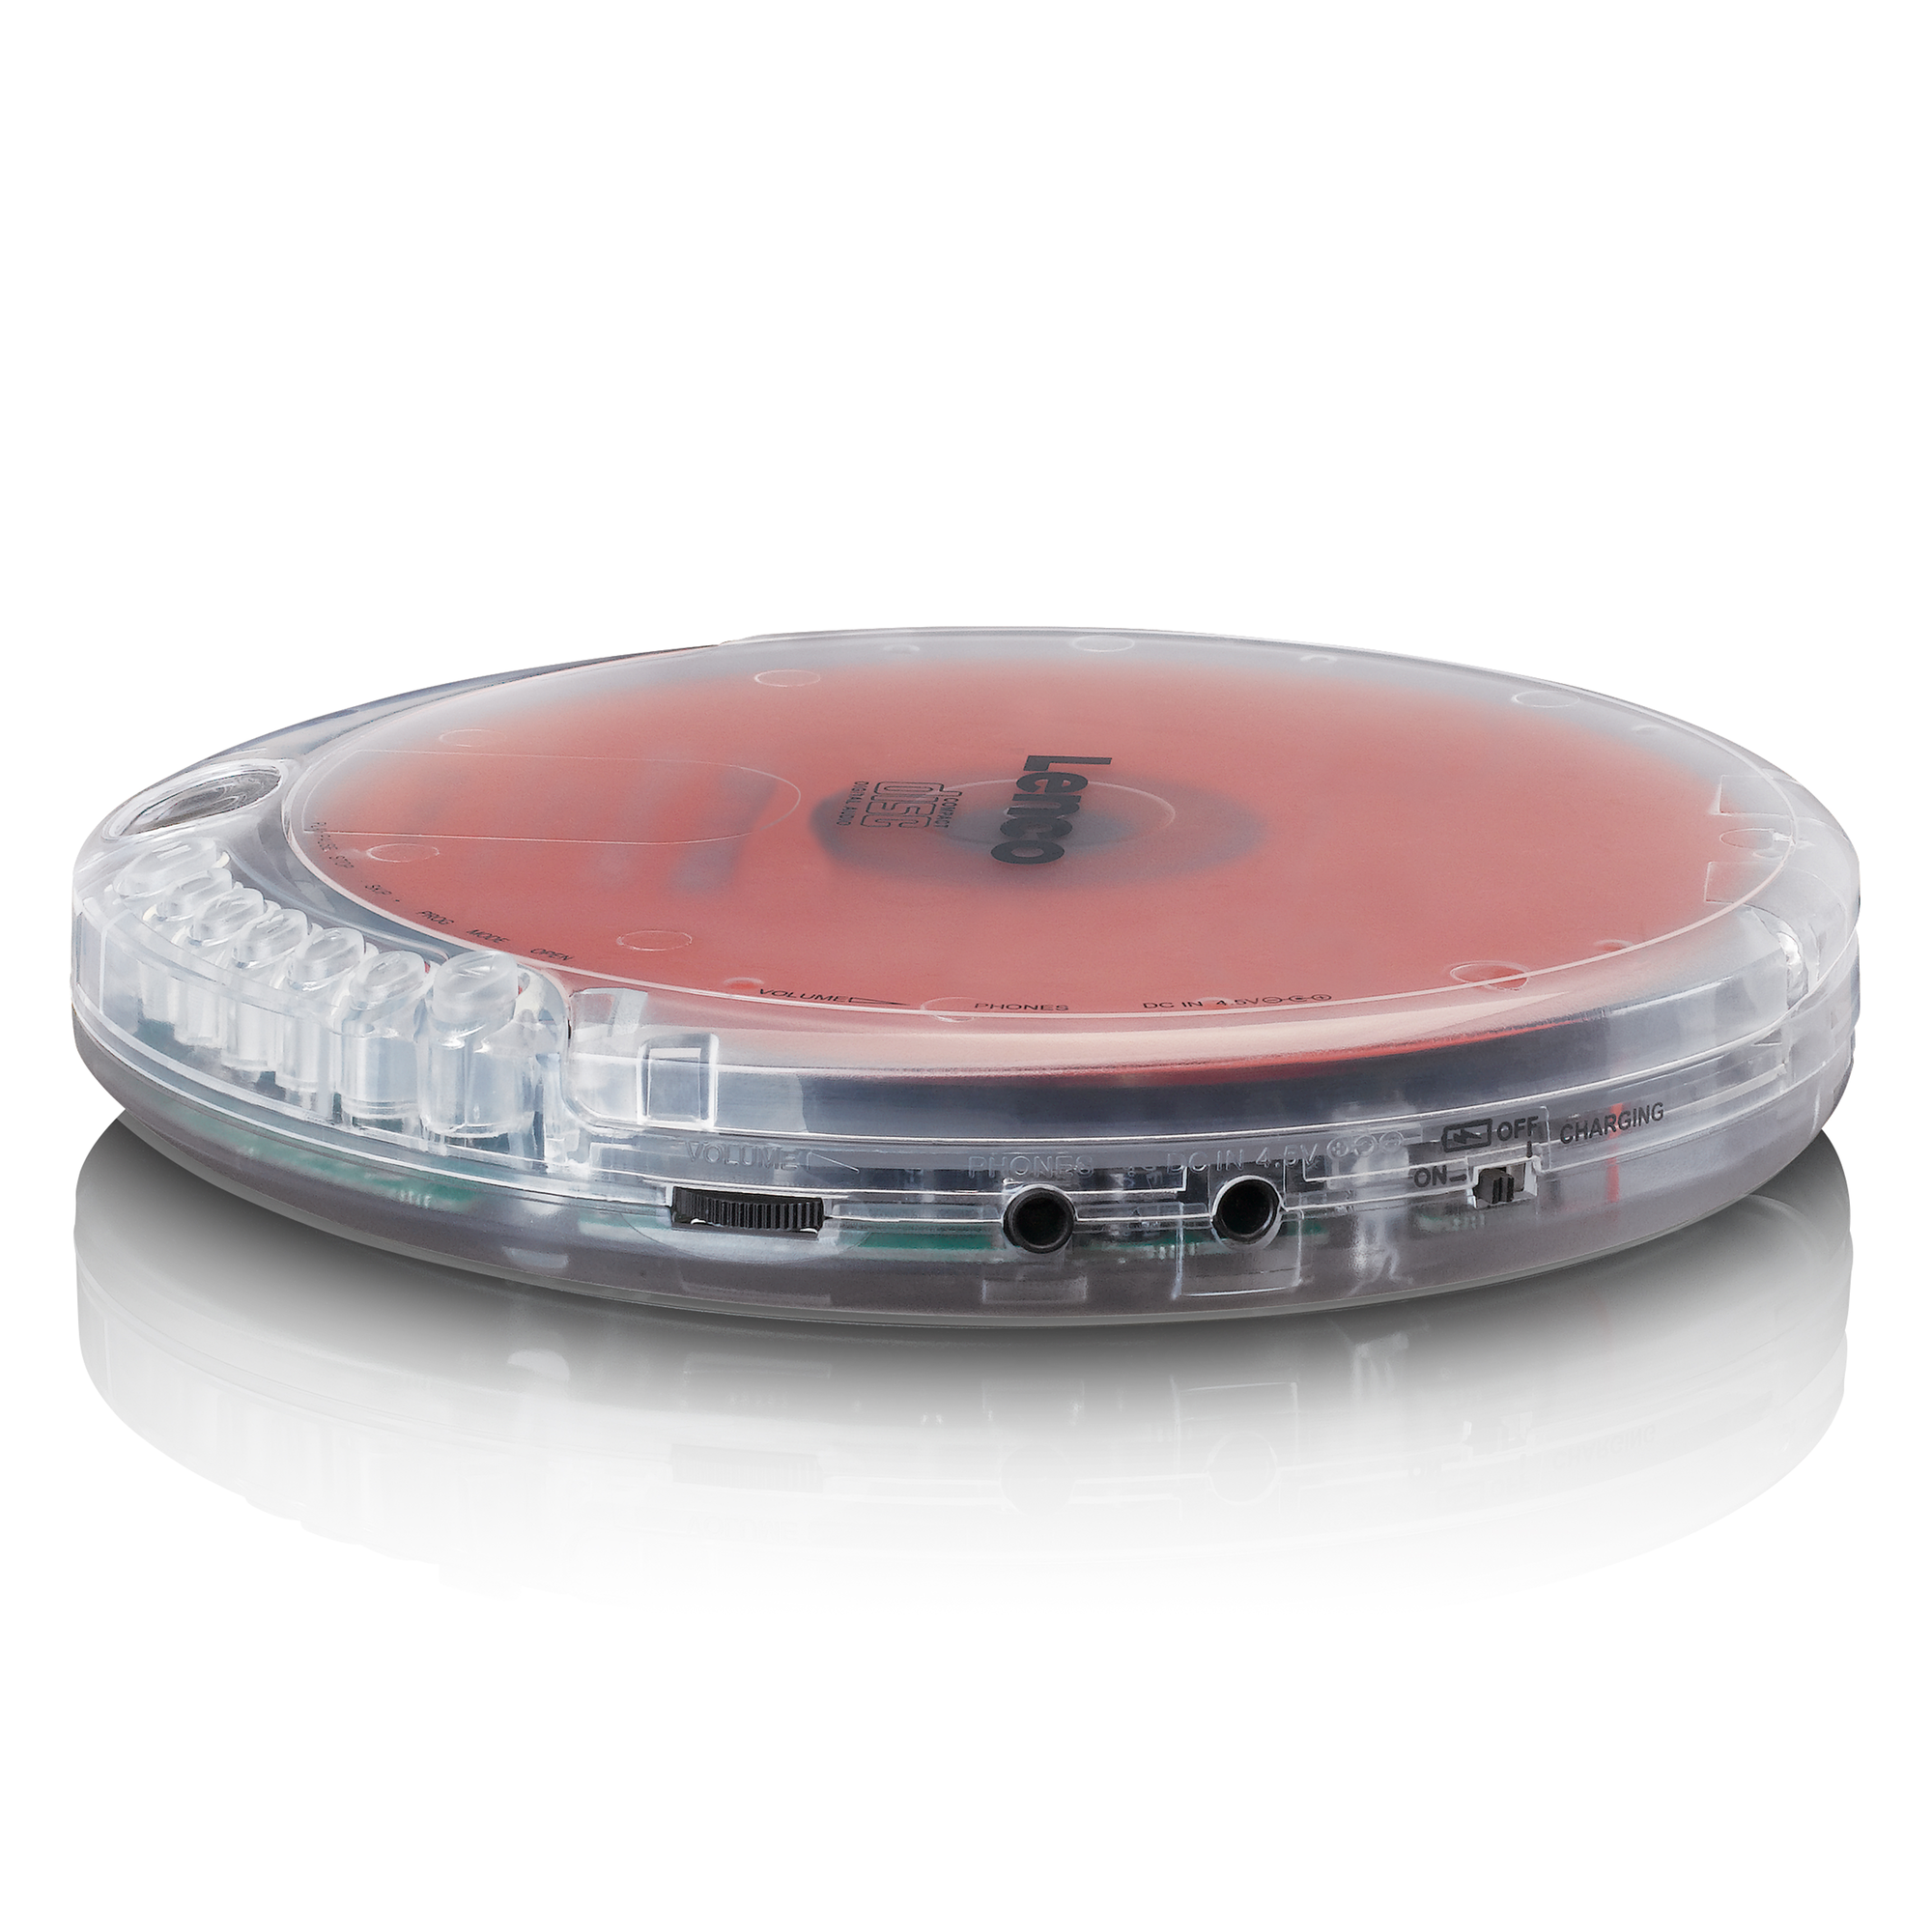 LENCO CD-012TR - Wiederaufladbar - Transparant Tragbarer CD-Spieler